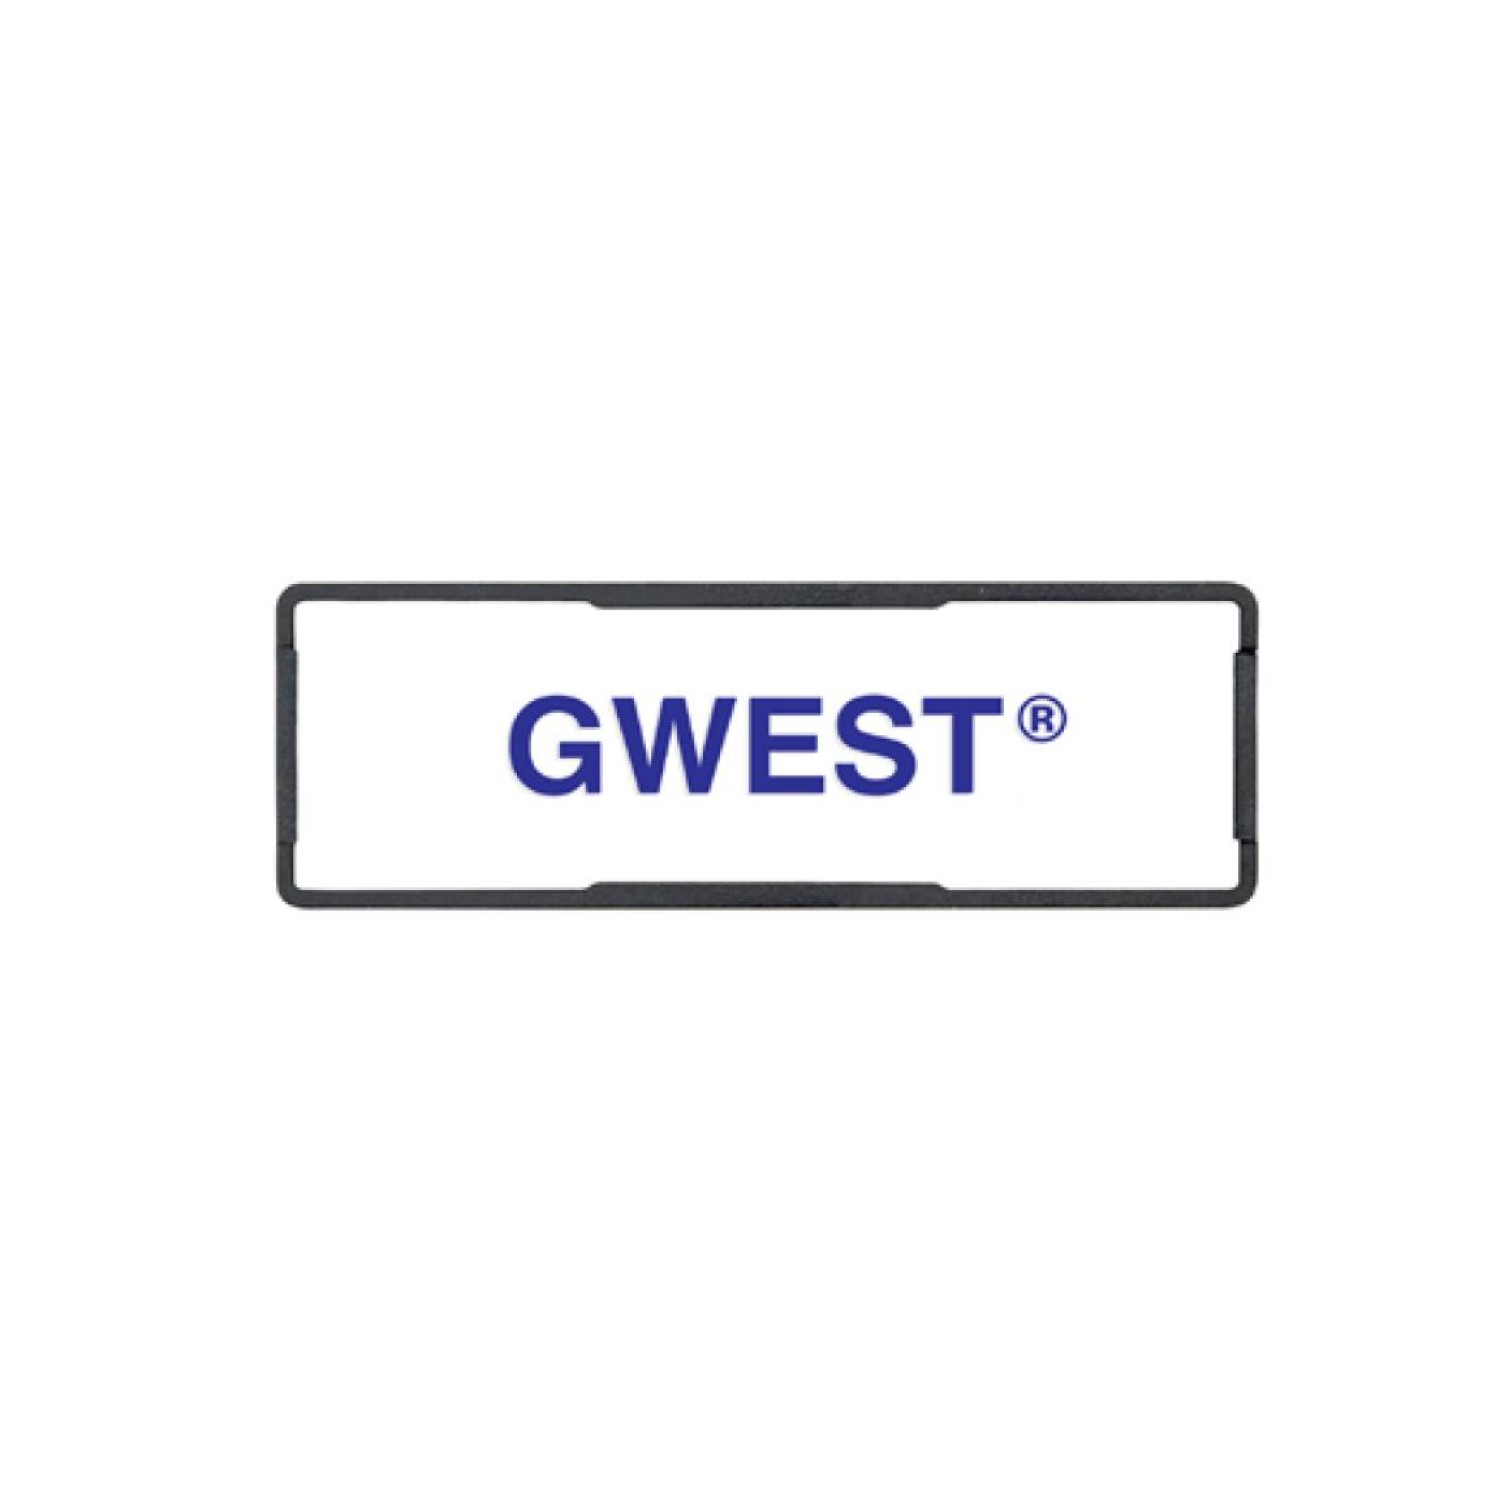 Gwest Pano Etiketi - GPET 3 - 5 Adet